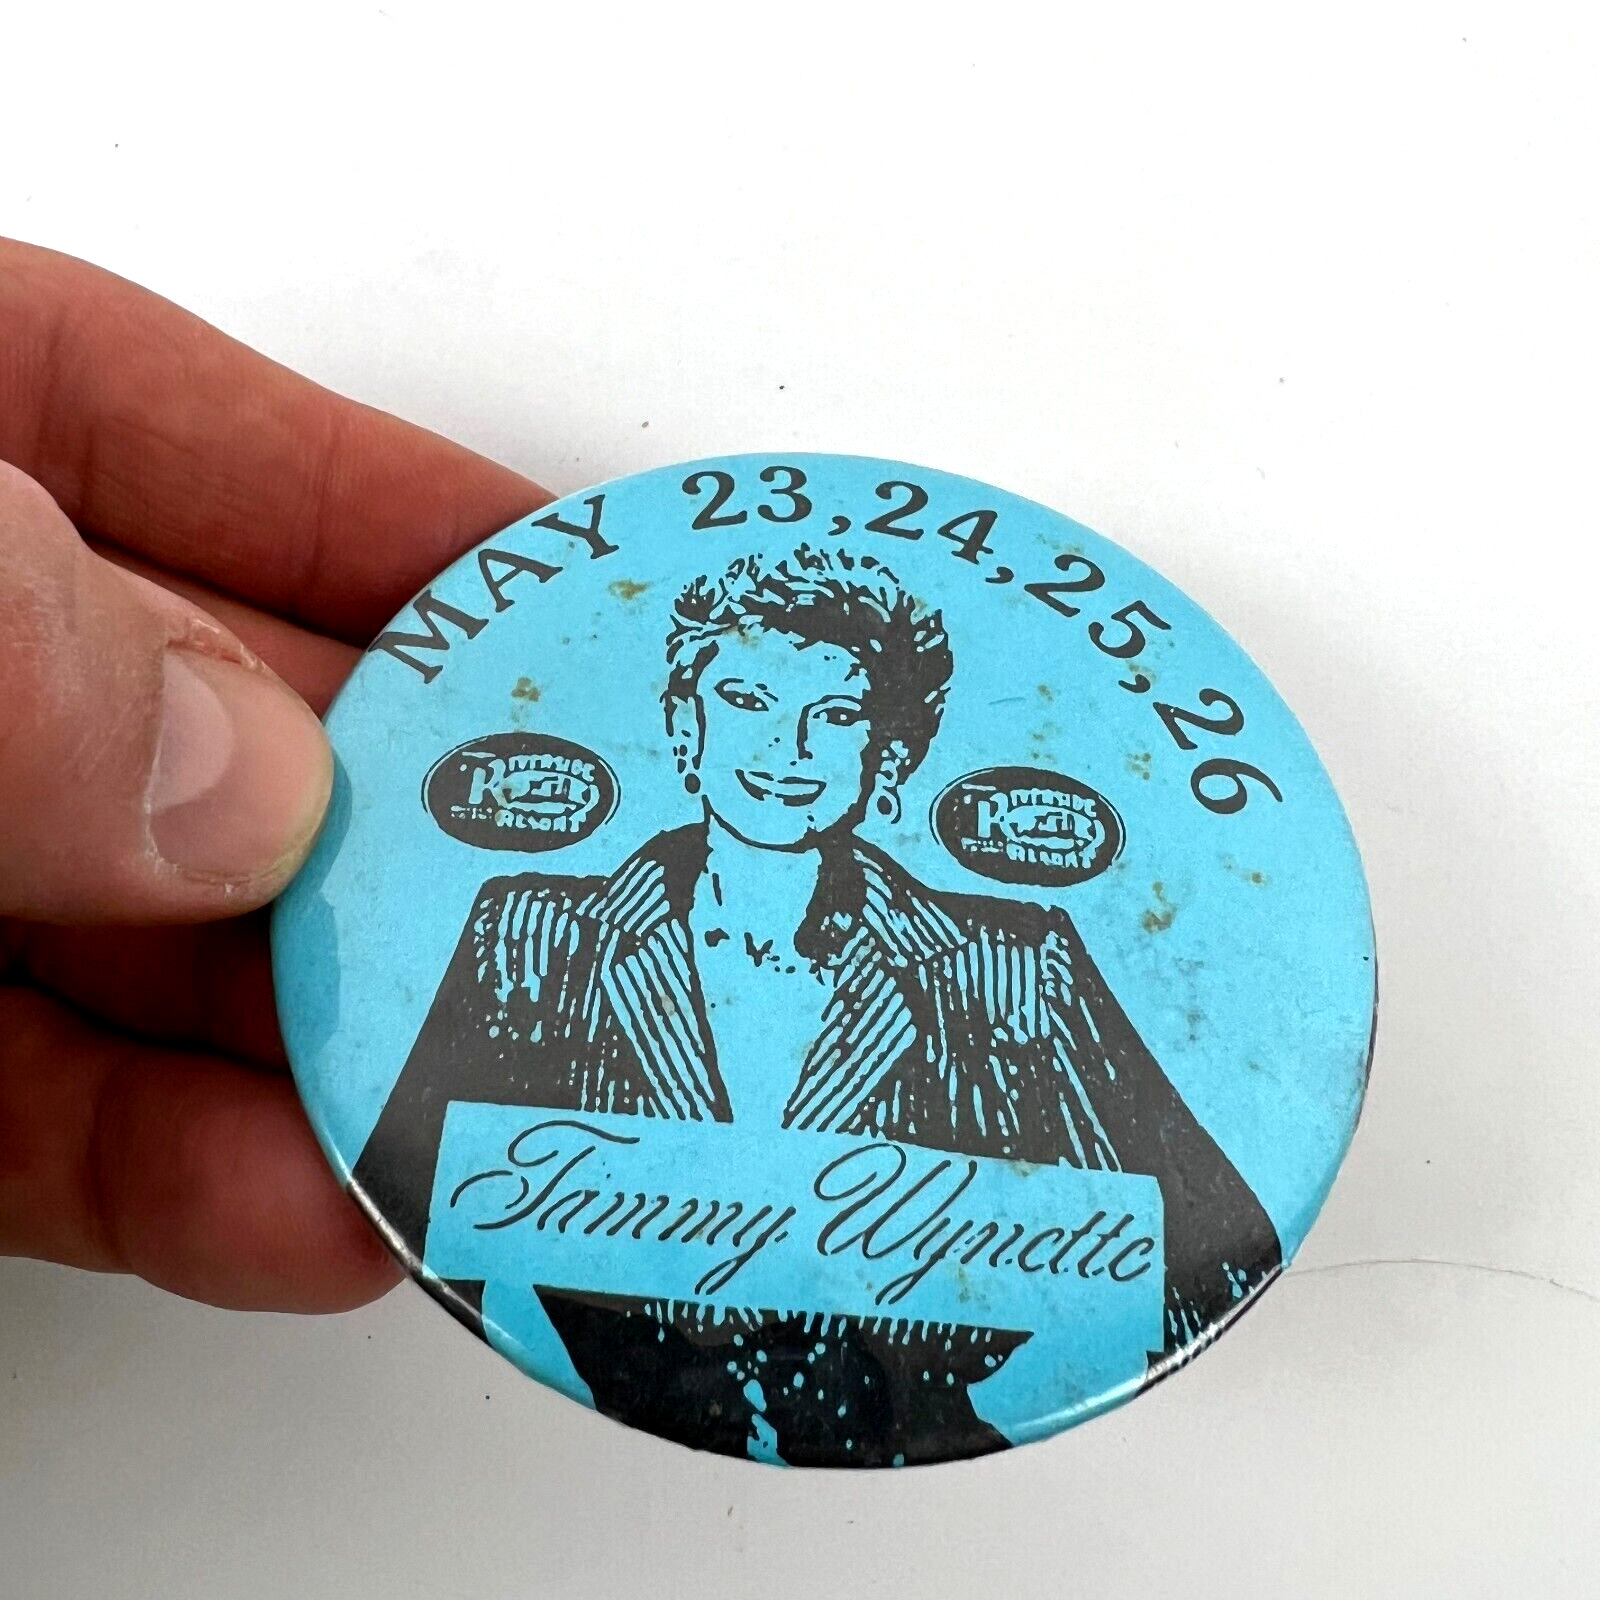 Tammy Wynette Concert Vintage Pinback Button Advertisement Spring Concert Blue